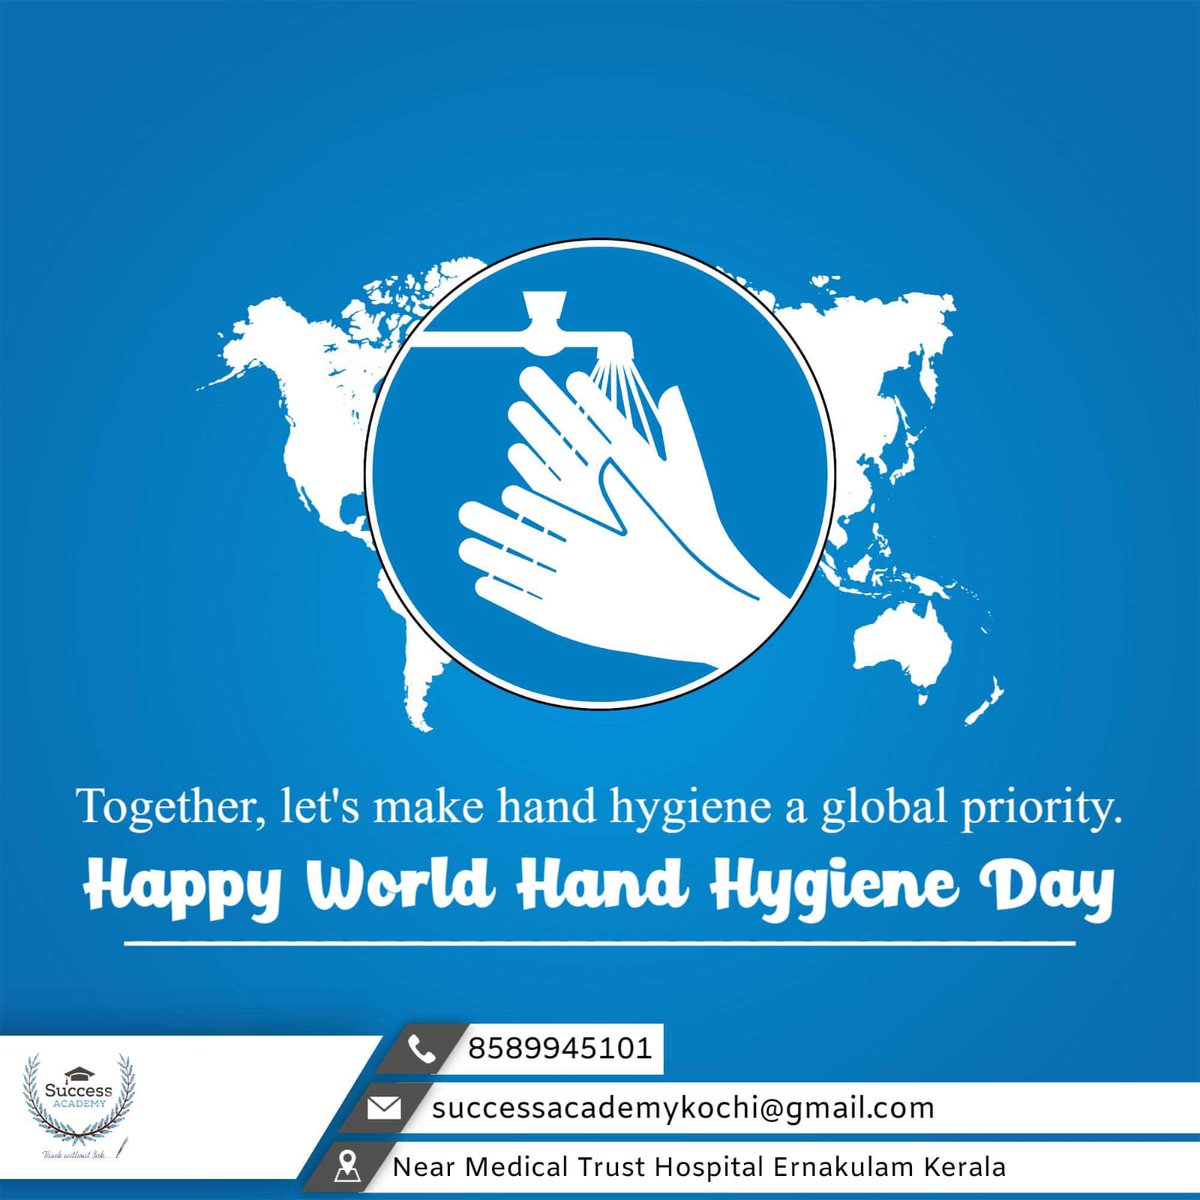 #HandHygieneDay #CleanHands #SafeHands #HandHygiene #InfectionPrevention #HandWashing #HealthcareAssociatedInfections #WashYourHands #HandHygieneMatters #StopTheSpread #GoodHygiene #HandSanitizing #HandHygieneForAll #bookoftheday #SSCCoaching #BankCoaching #successacademykochi